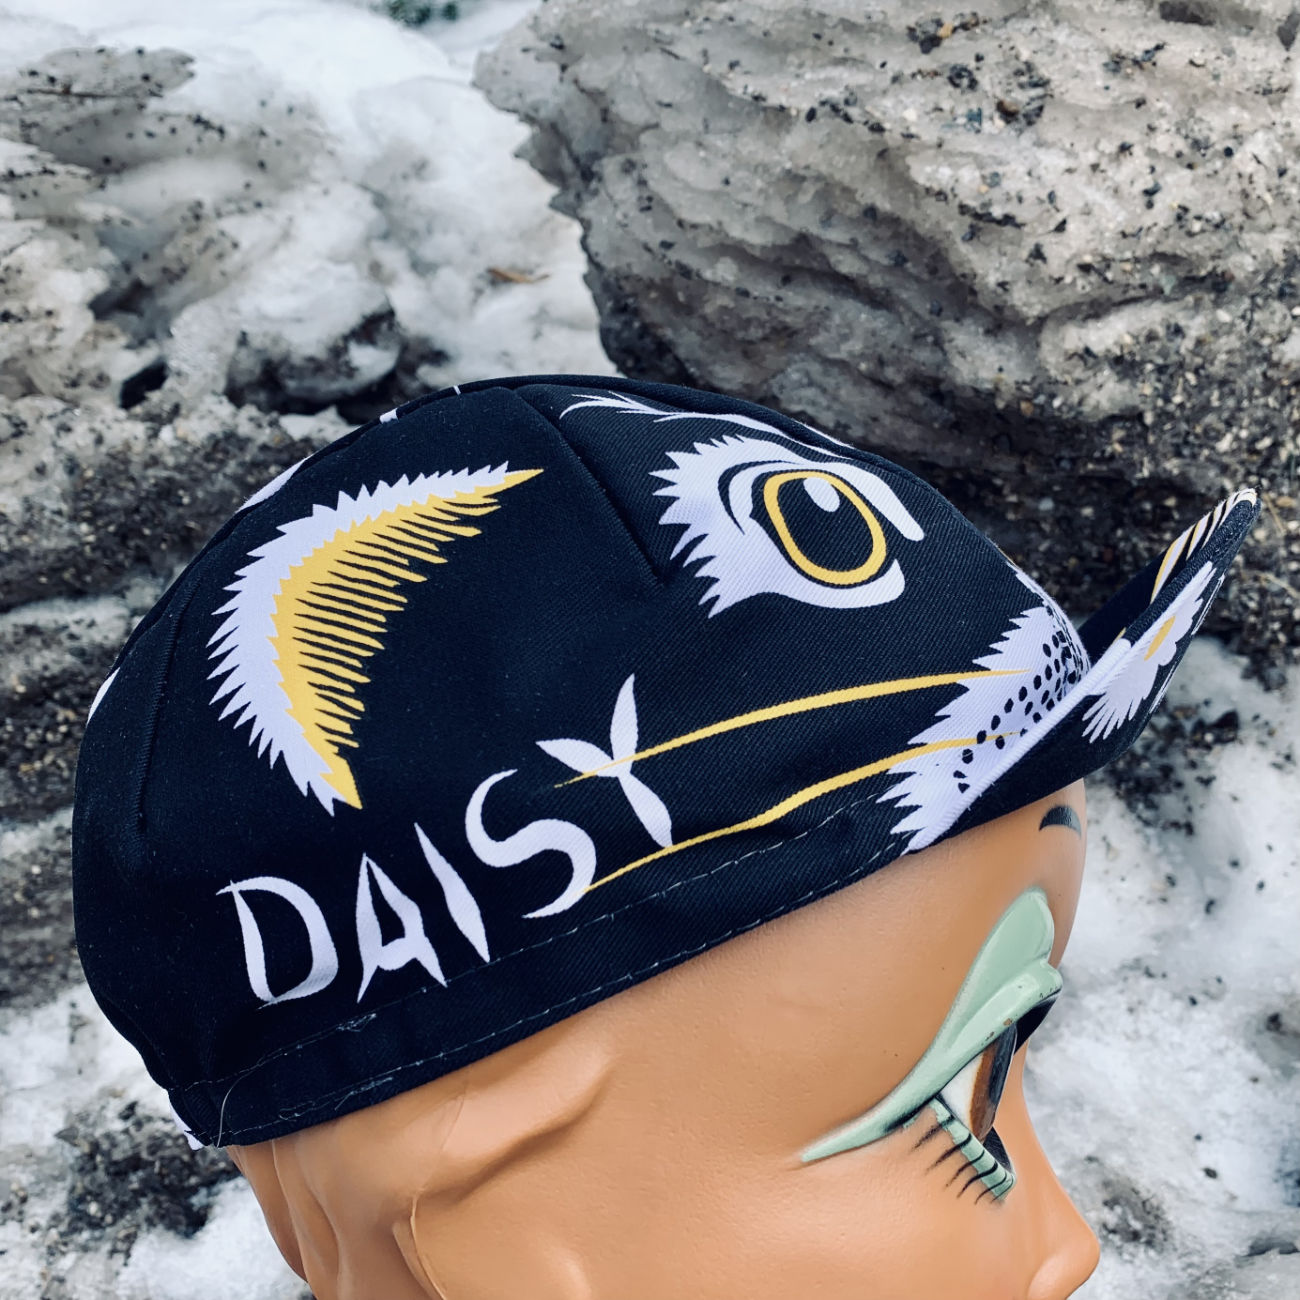 Daisy Messenger cycling cap